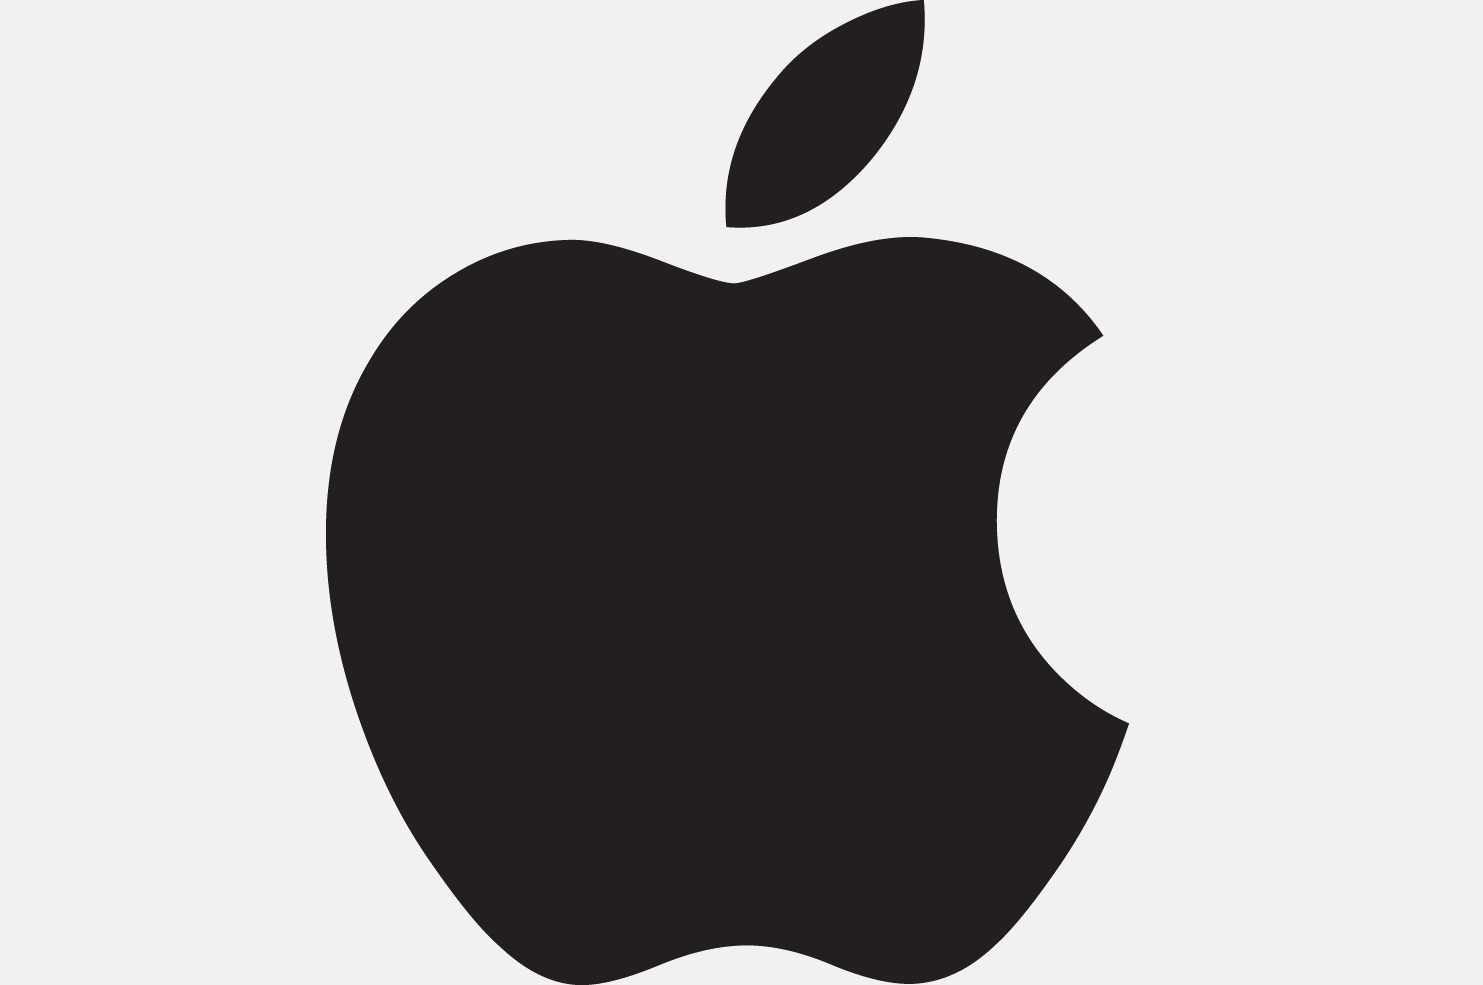 Iphone 5 apple logo clipart - ClipartFox